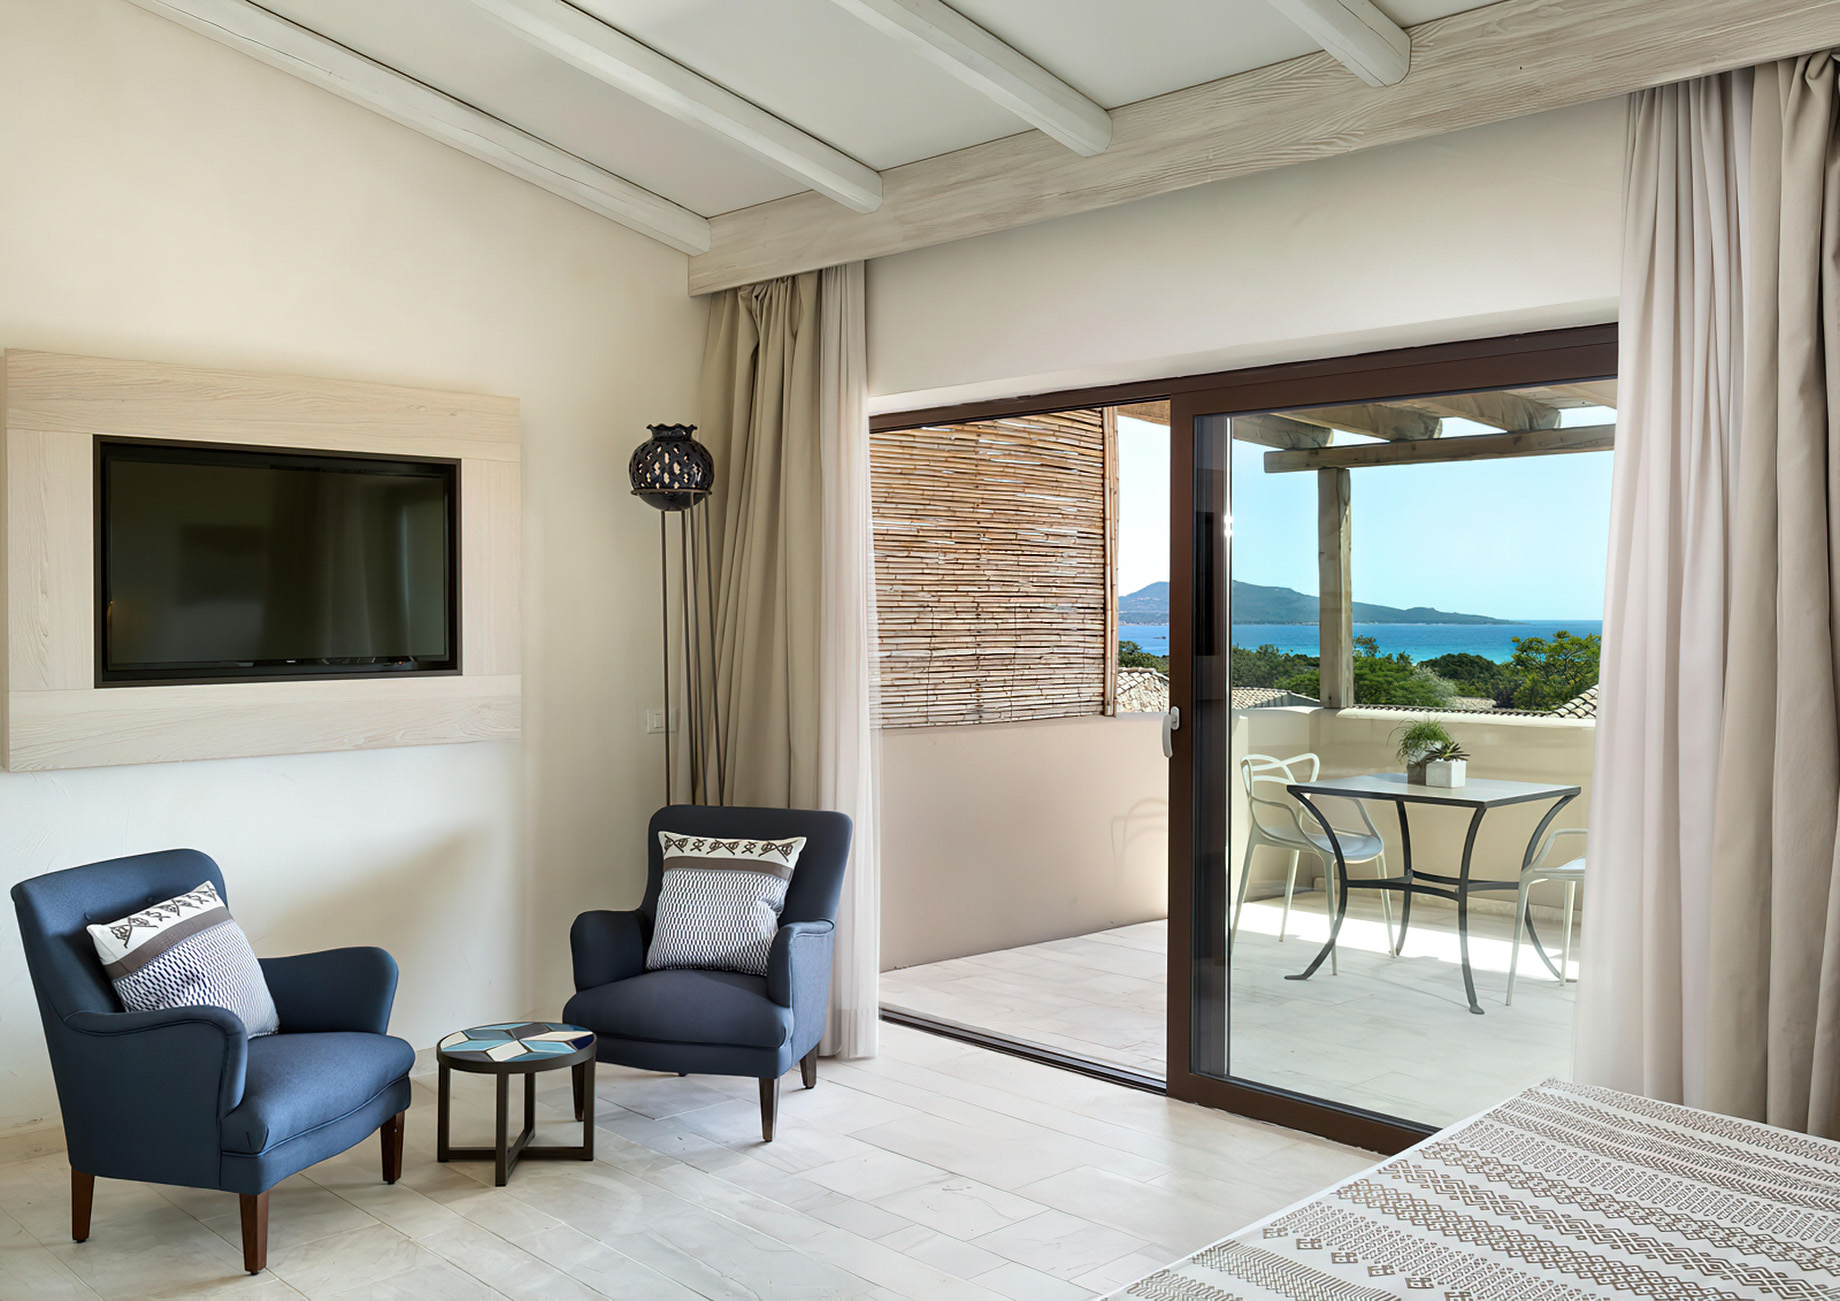 Baglioni Resort Sardinia – San Teodoro, Sardegna, Italy – Junior Suite Sea View Sitting Area